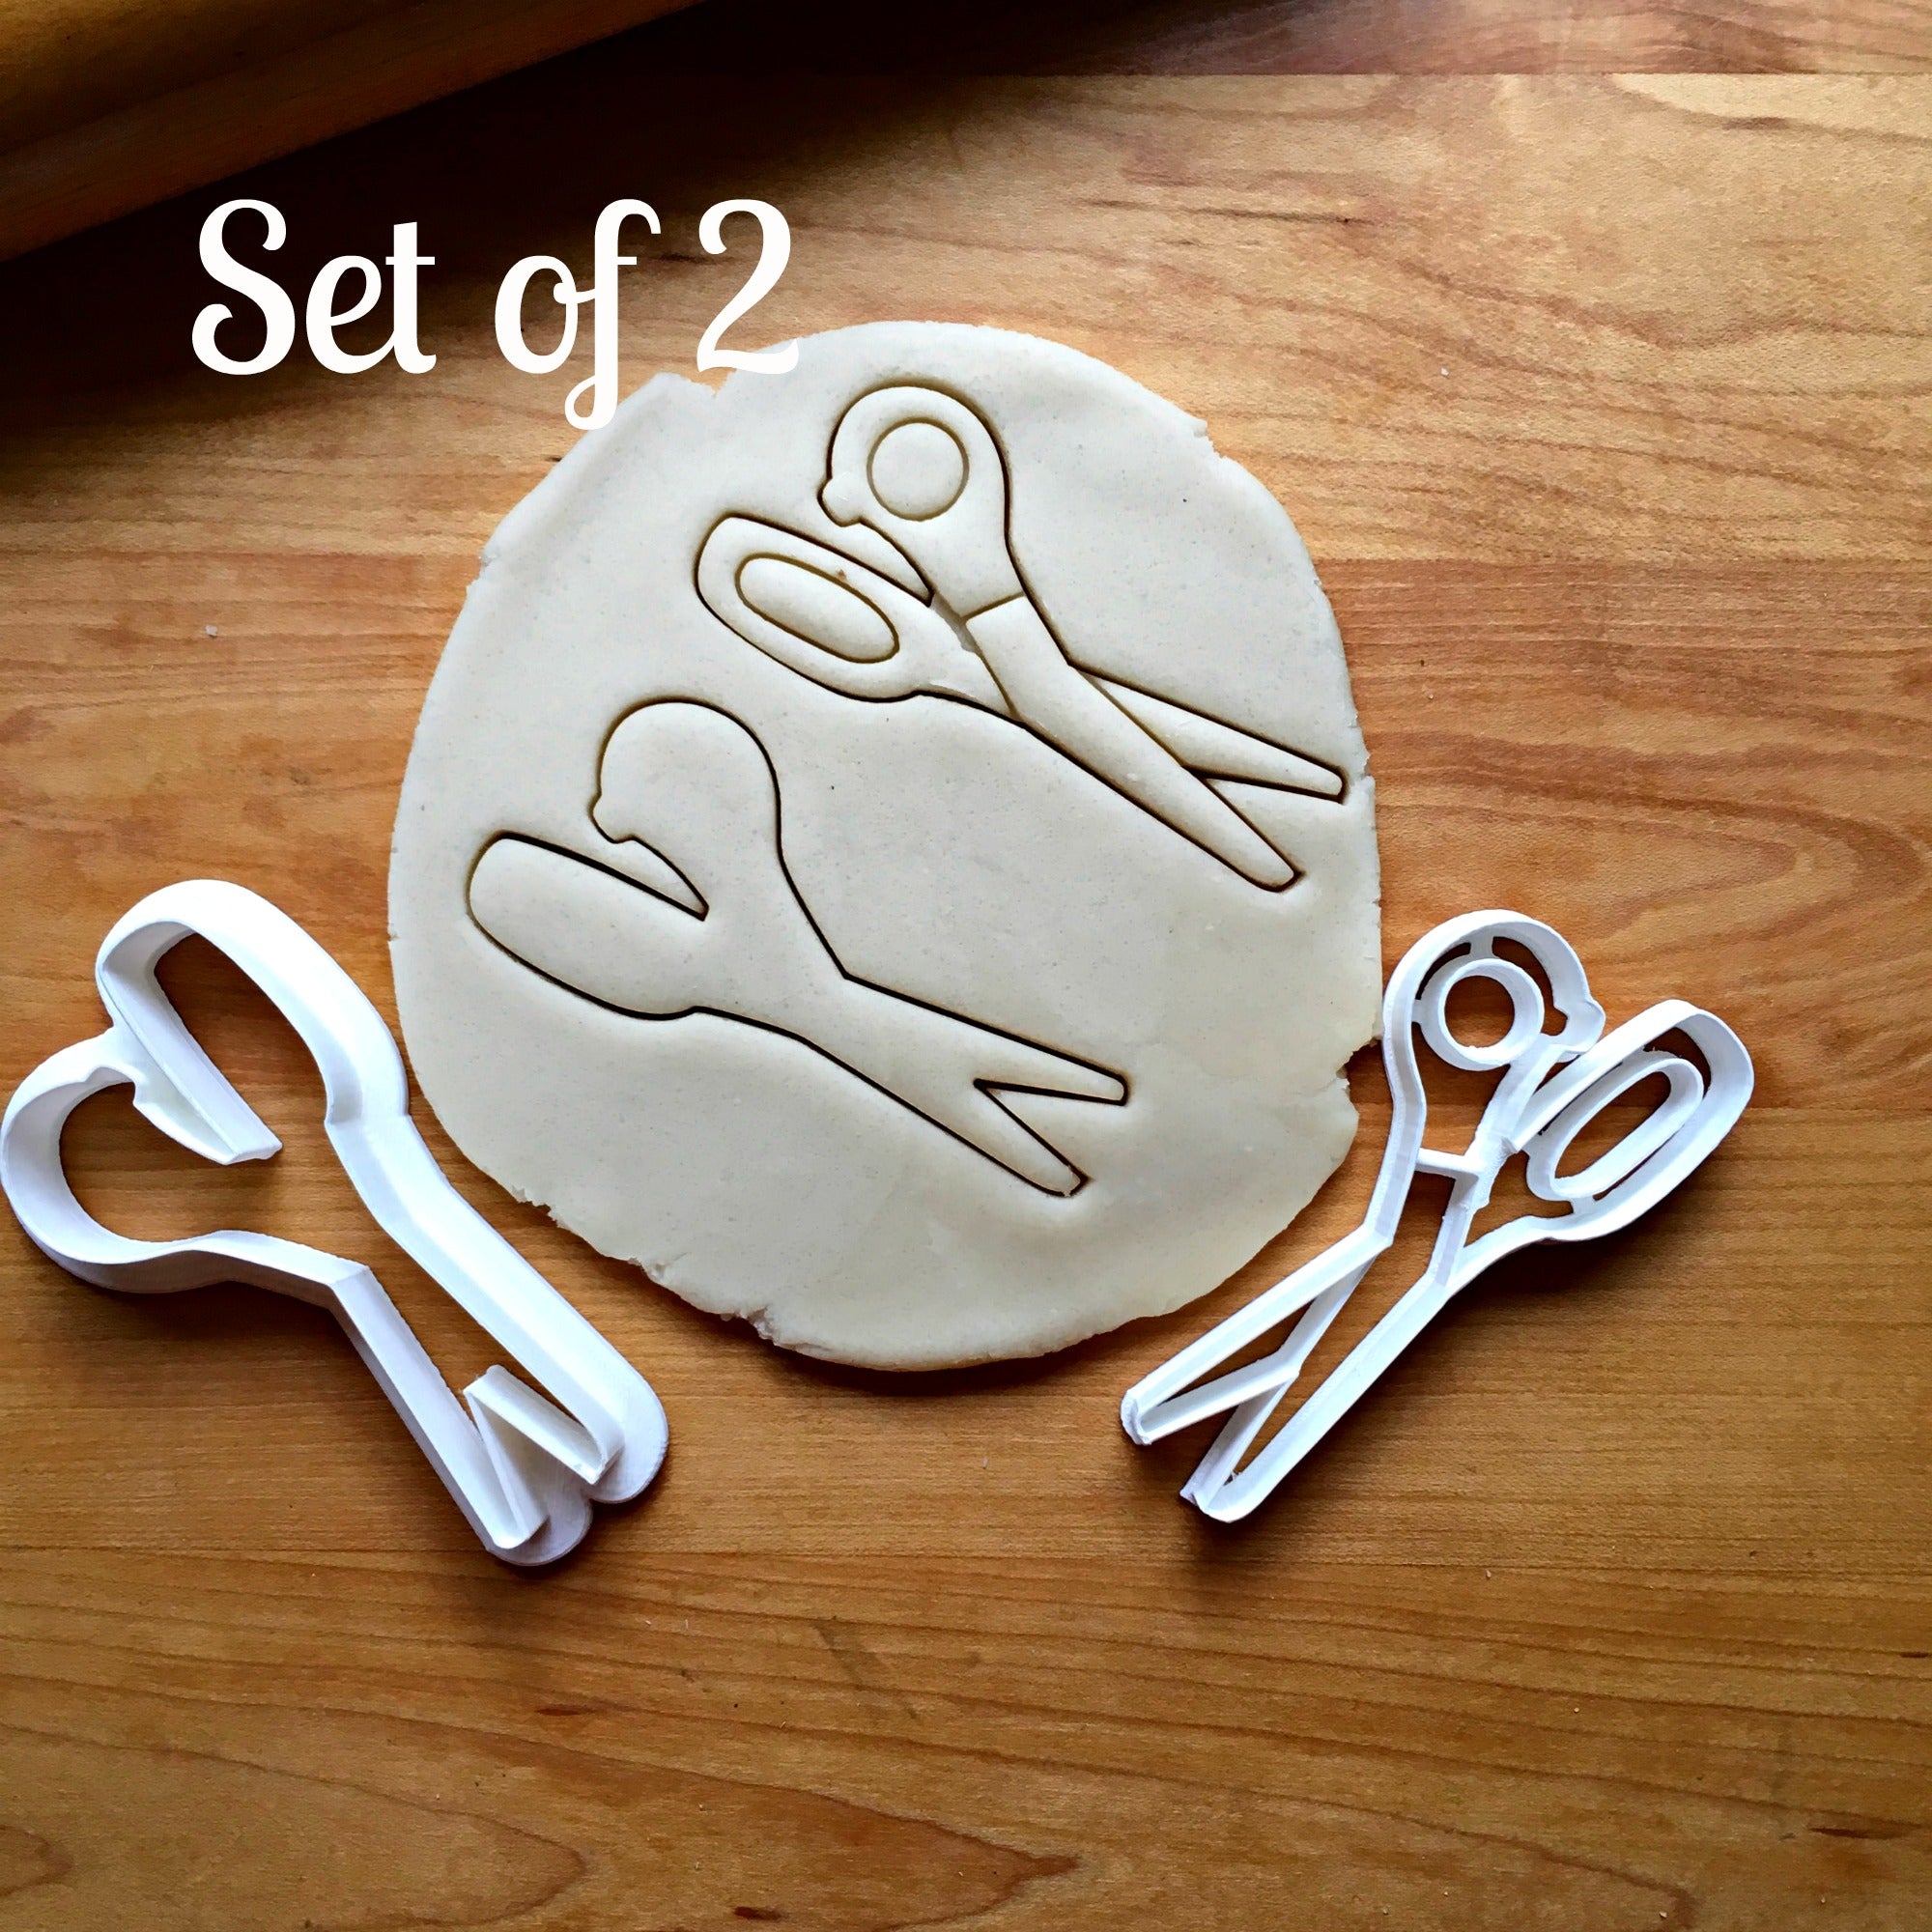 Set of 2 Scissors Cookie Cutters/Dishwasher Safe